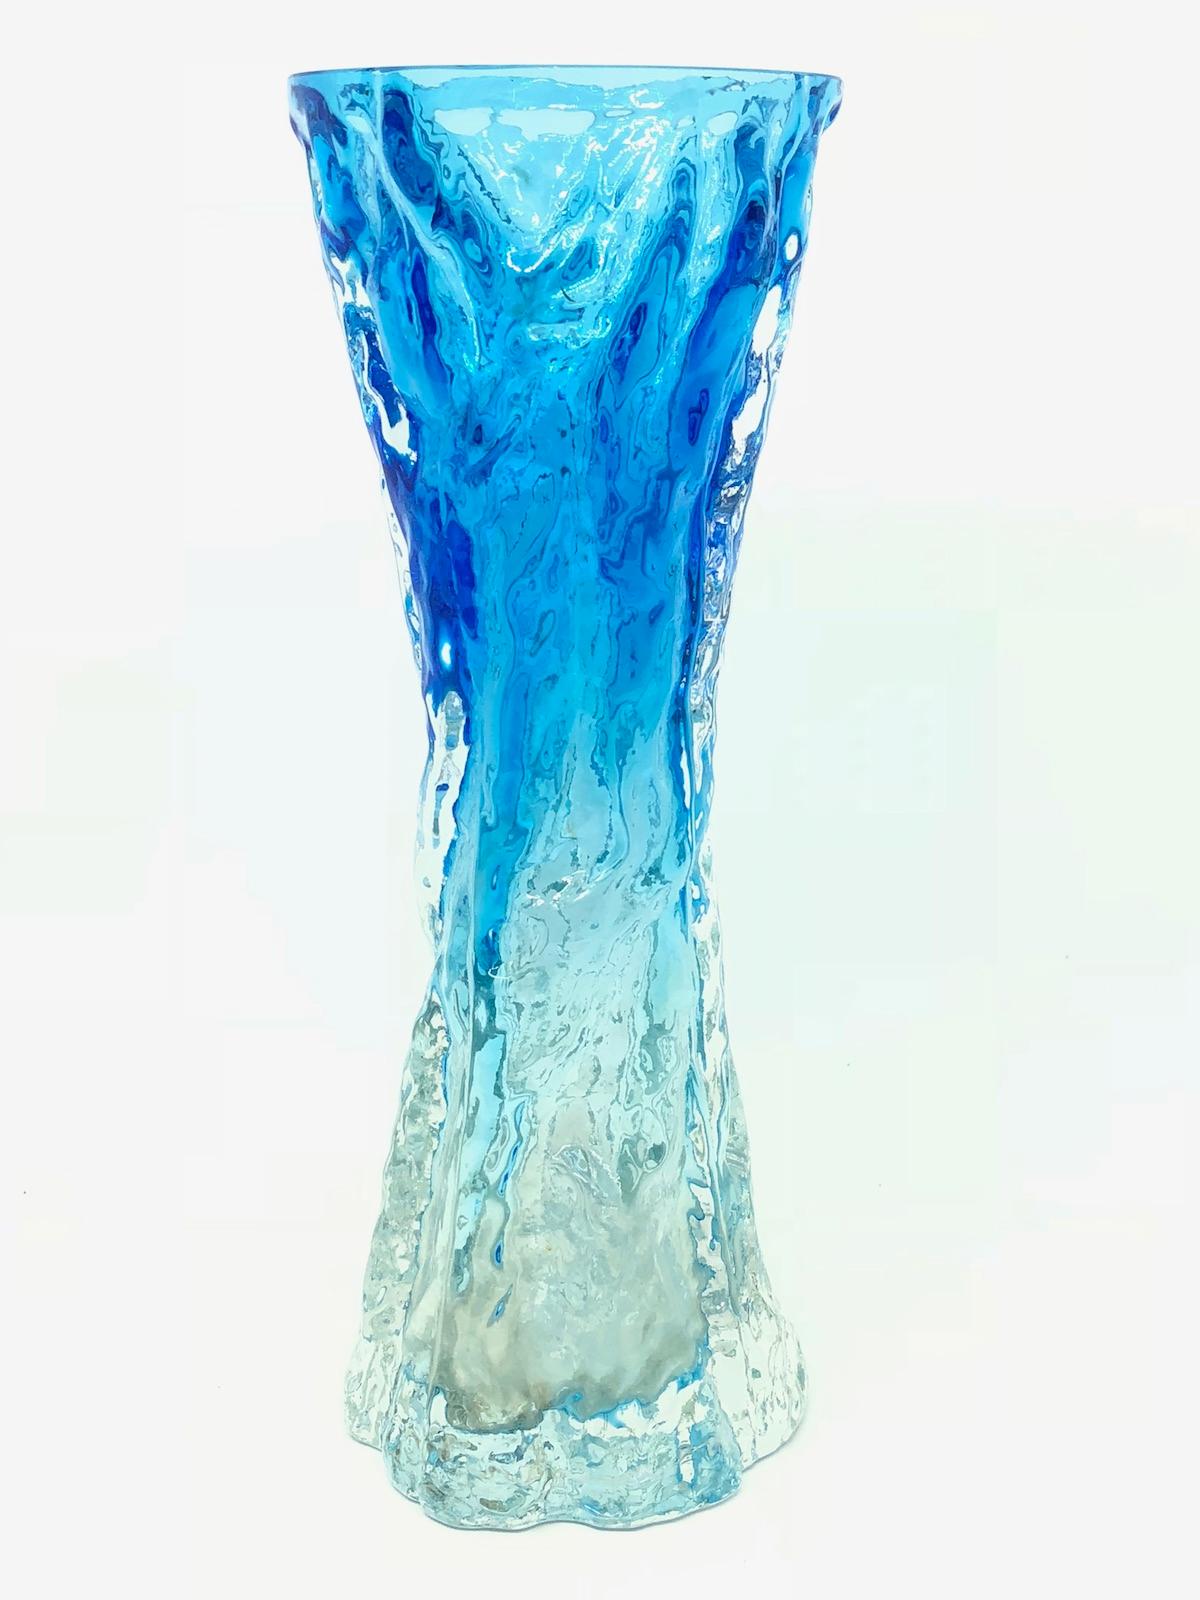 Mid-Century Modern Vase en forme d'écorce d'arbre en verre bleu vif allemand vintage par Ingrid Glas, vers 1970 en vente